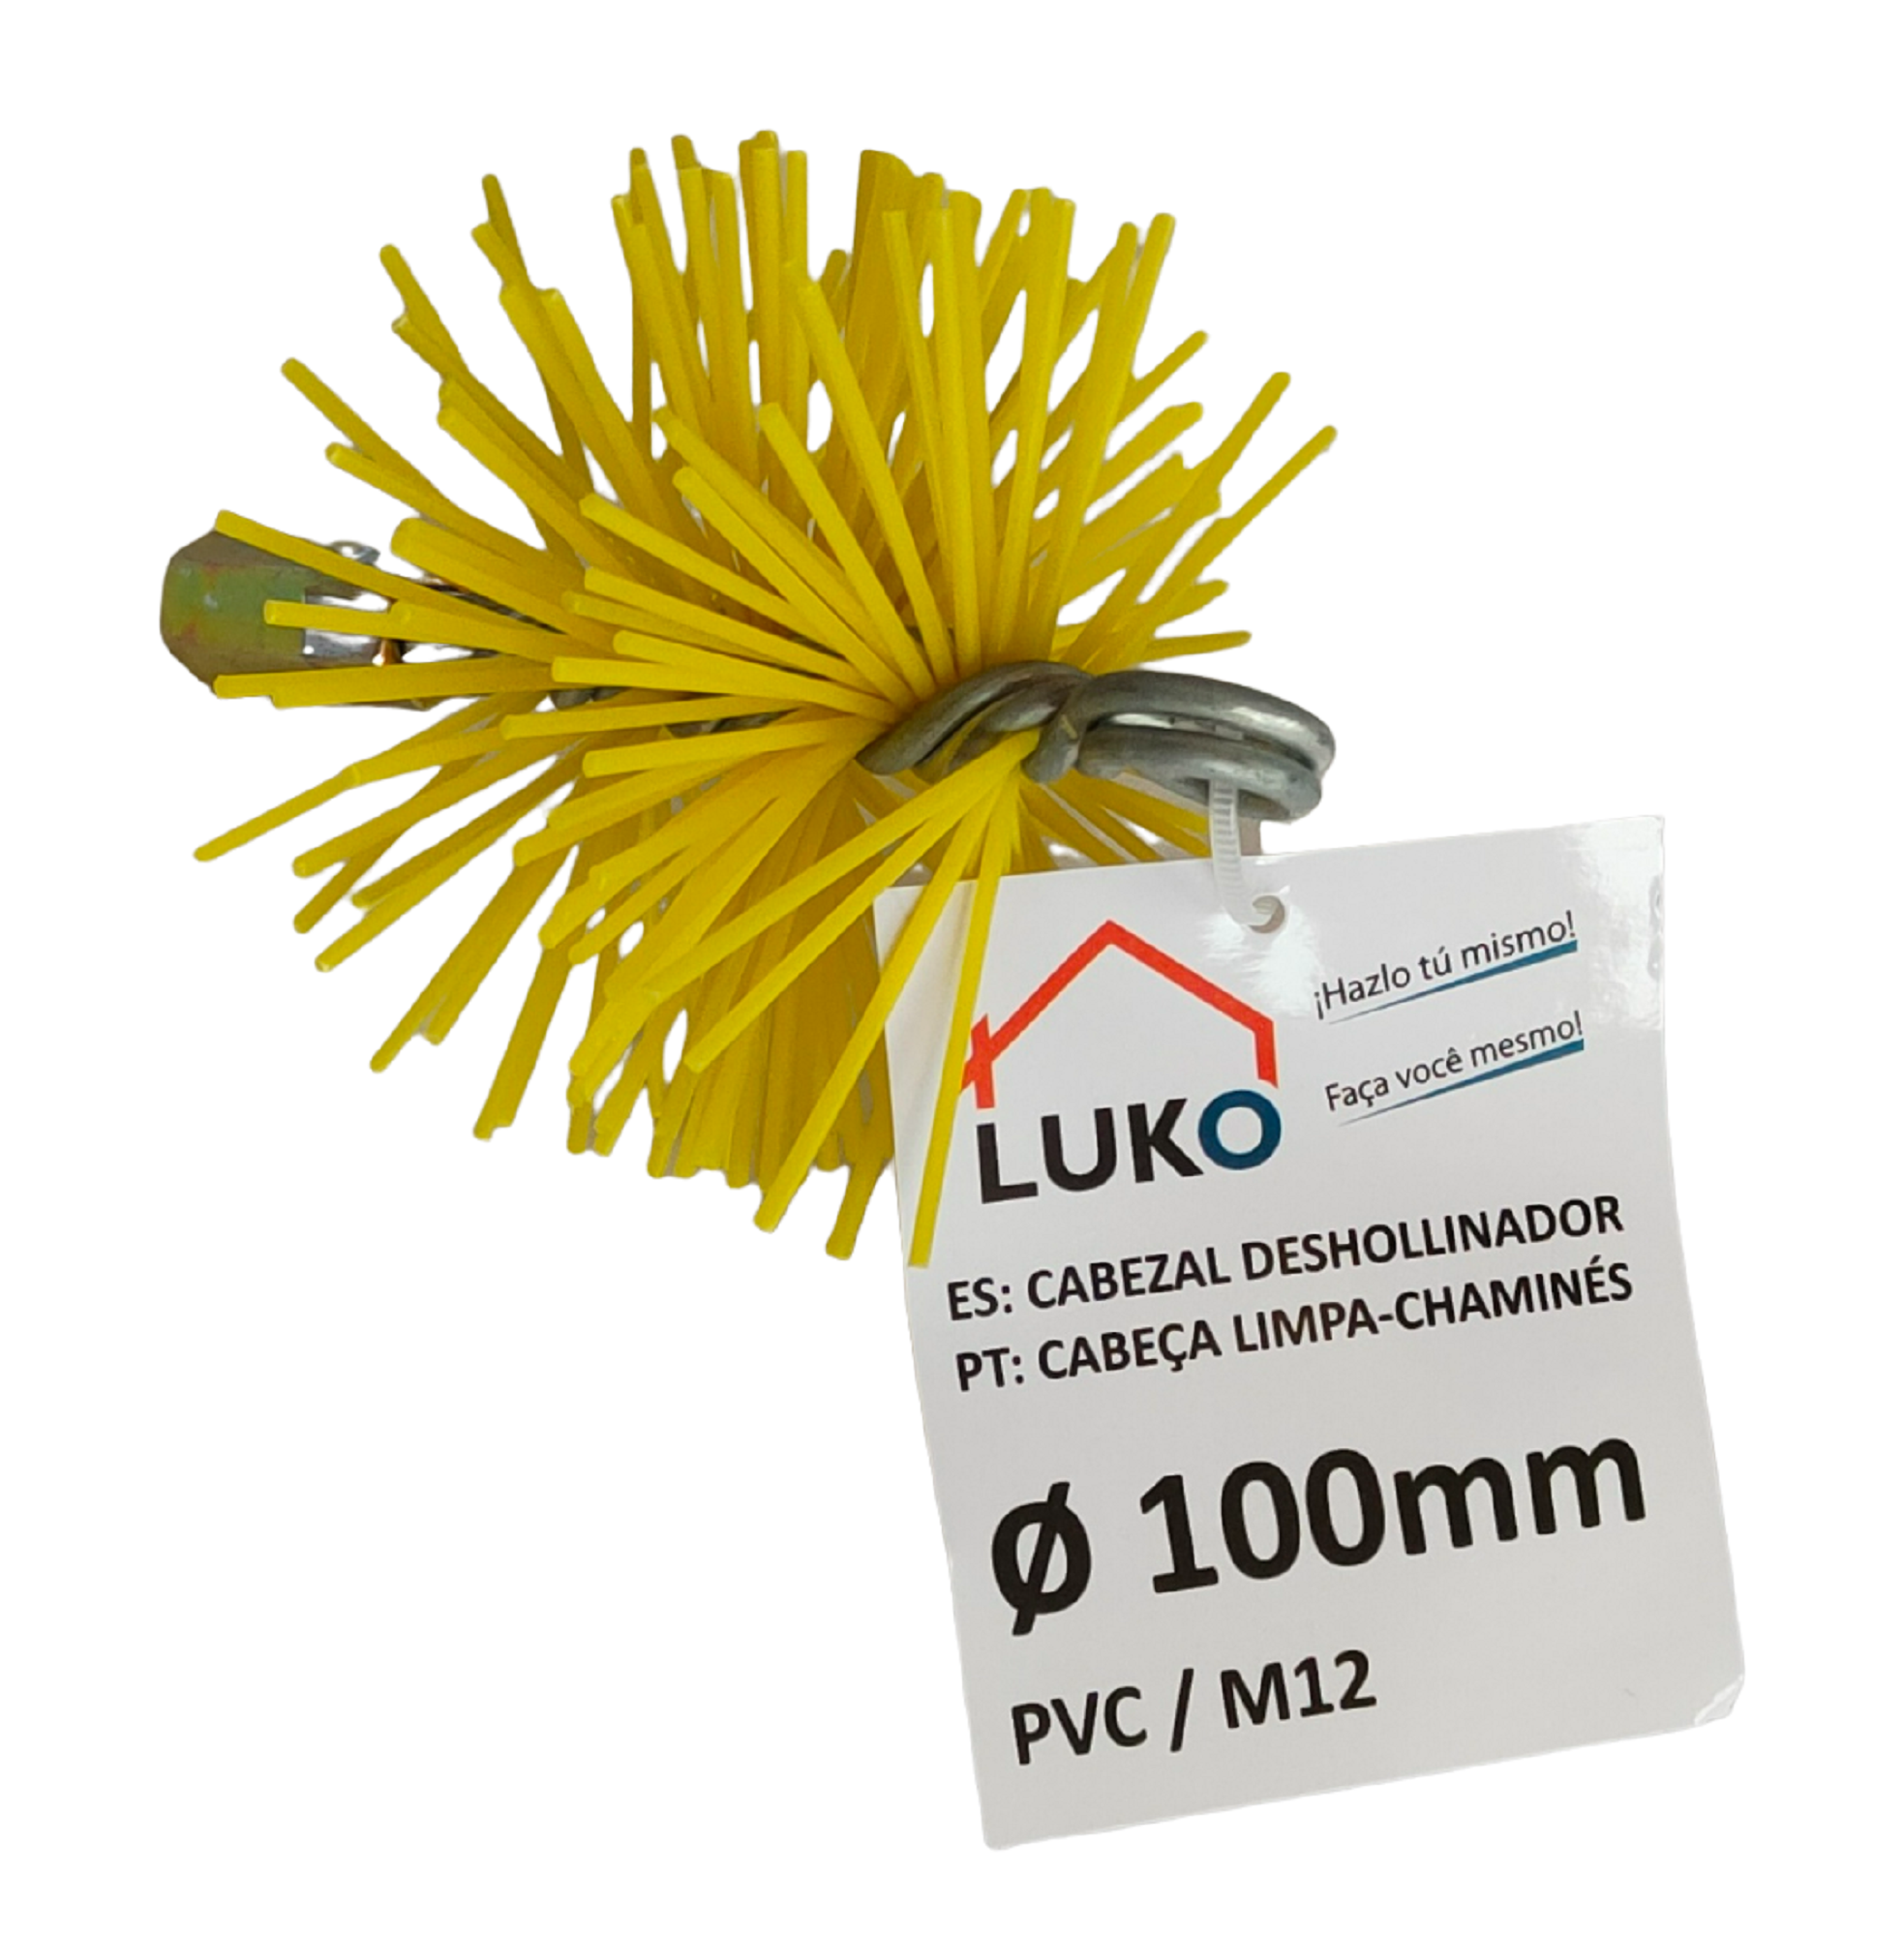 Cabezal de deshollinador de pvc luko de 100mm de diámetro